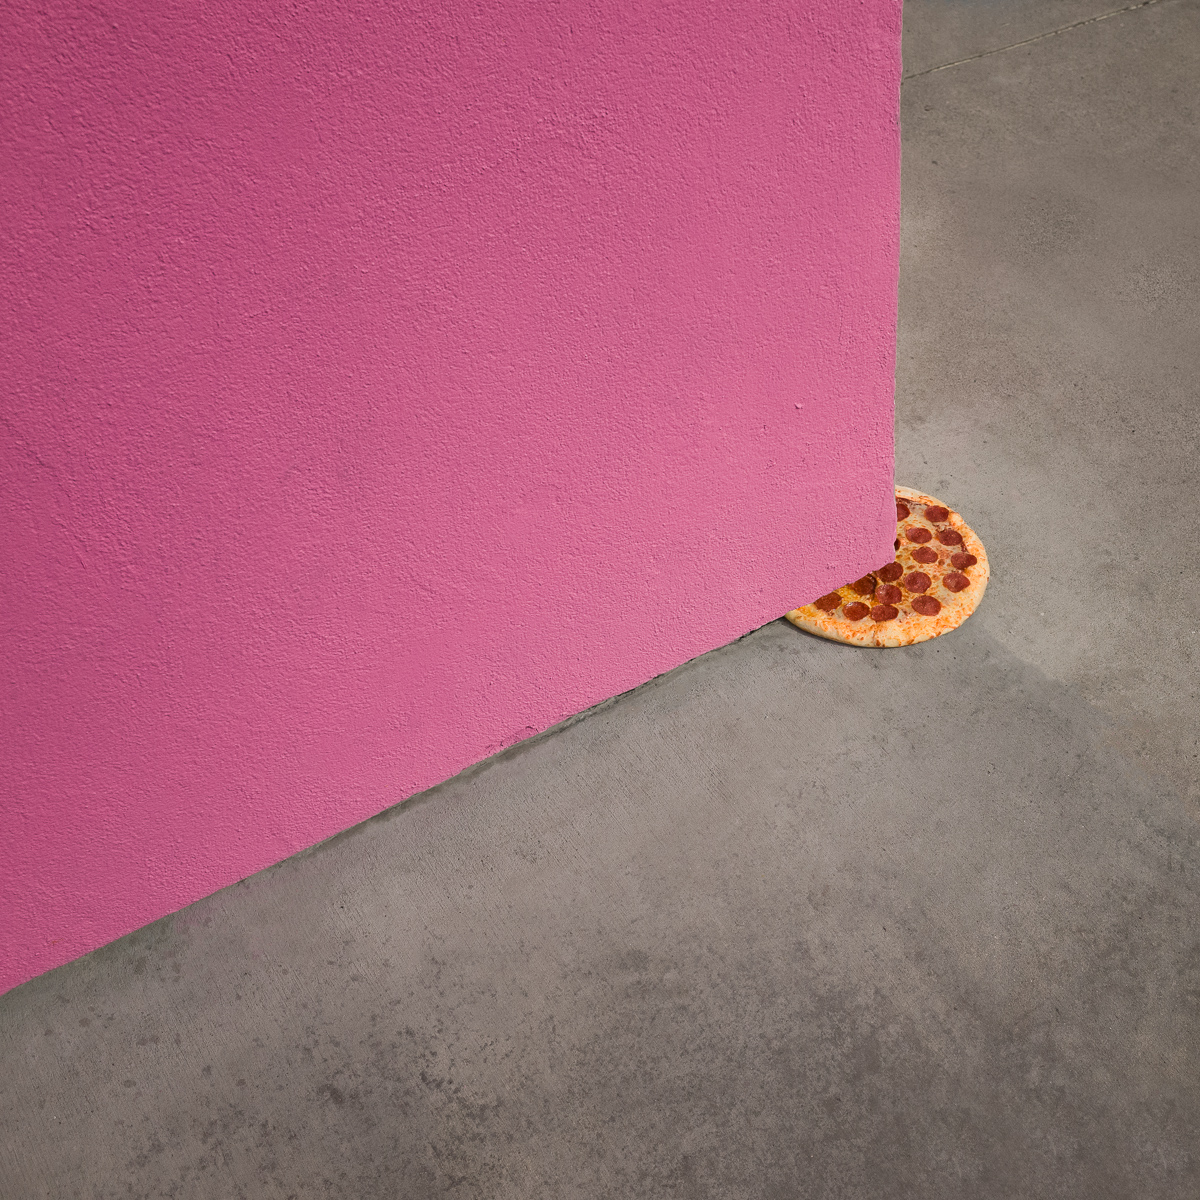 05202017_nota-pizza in the wild 02.jpg